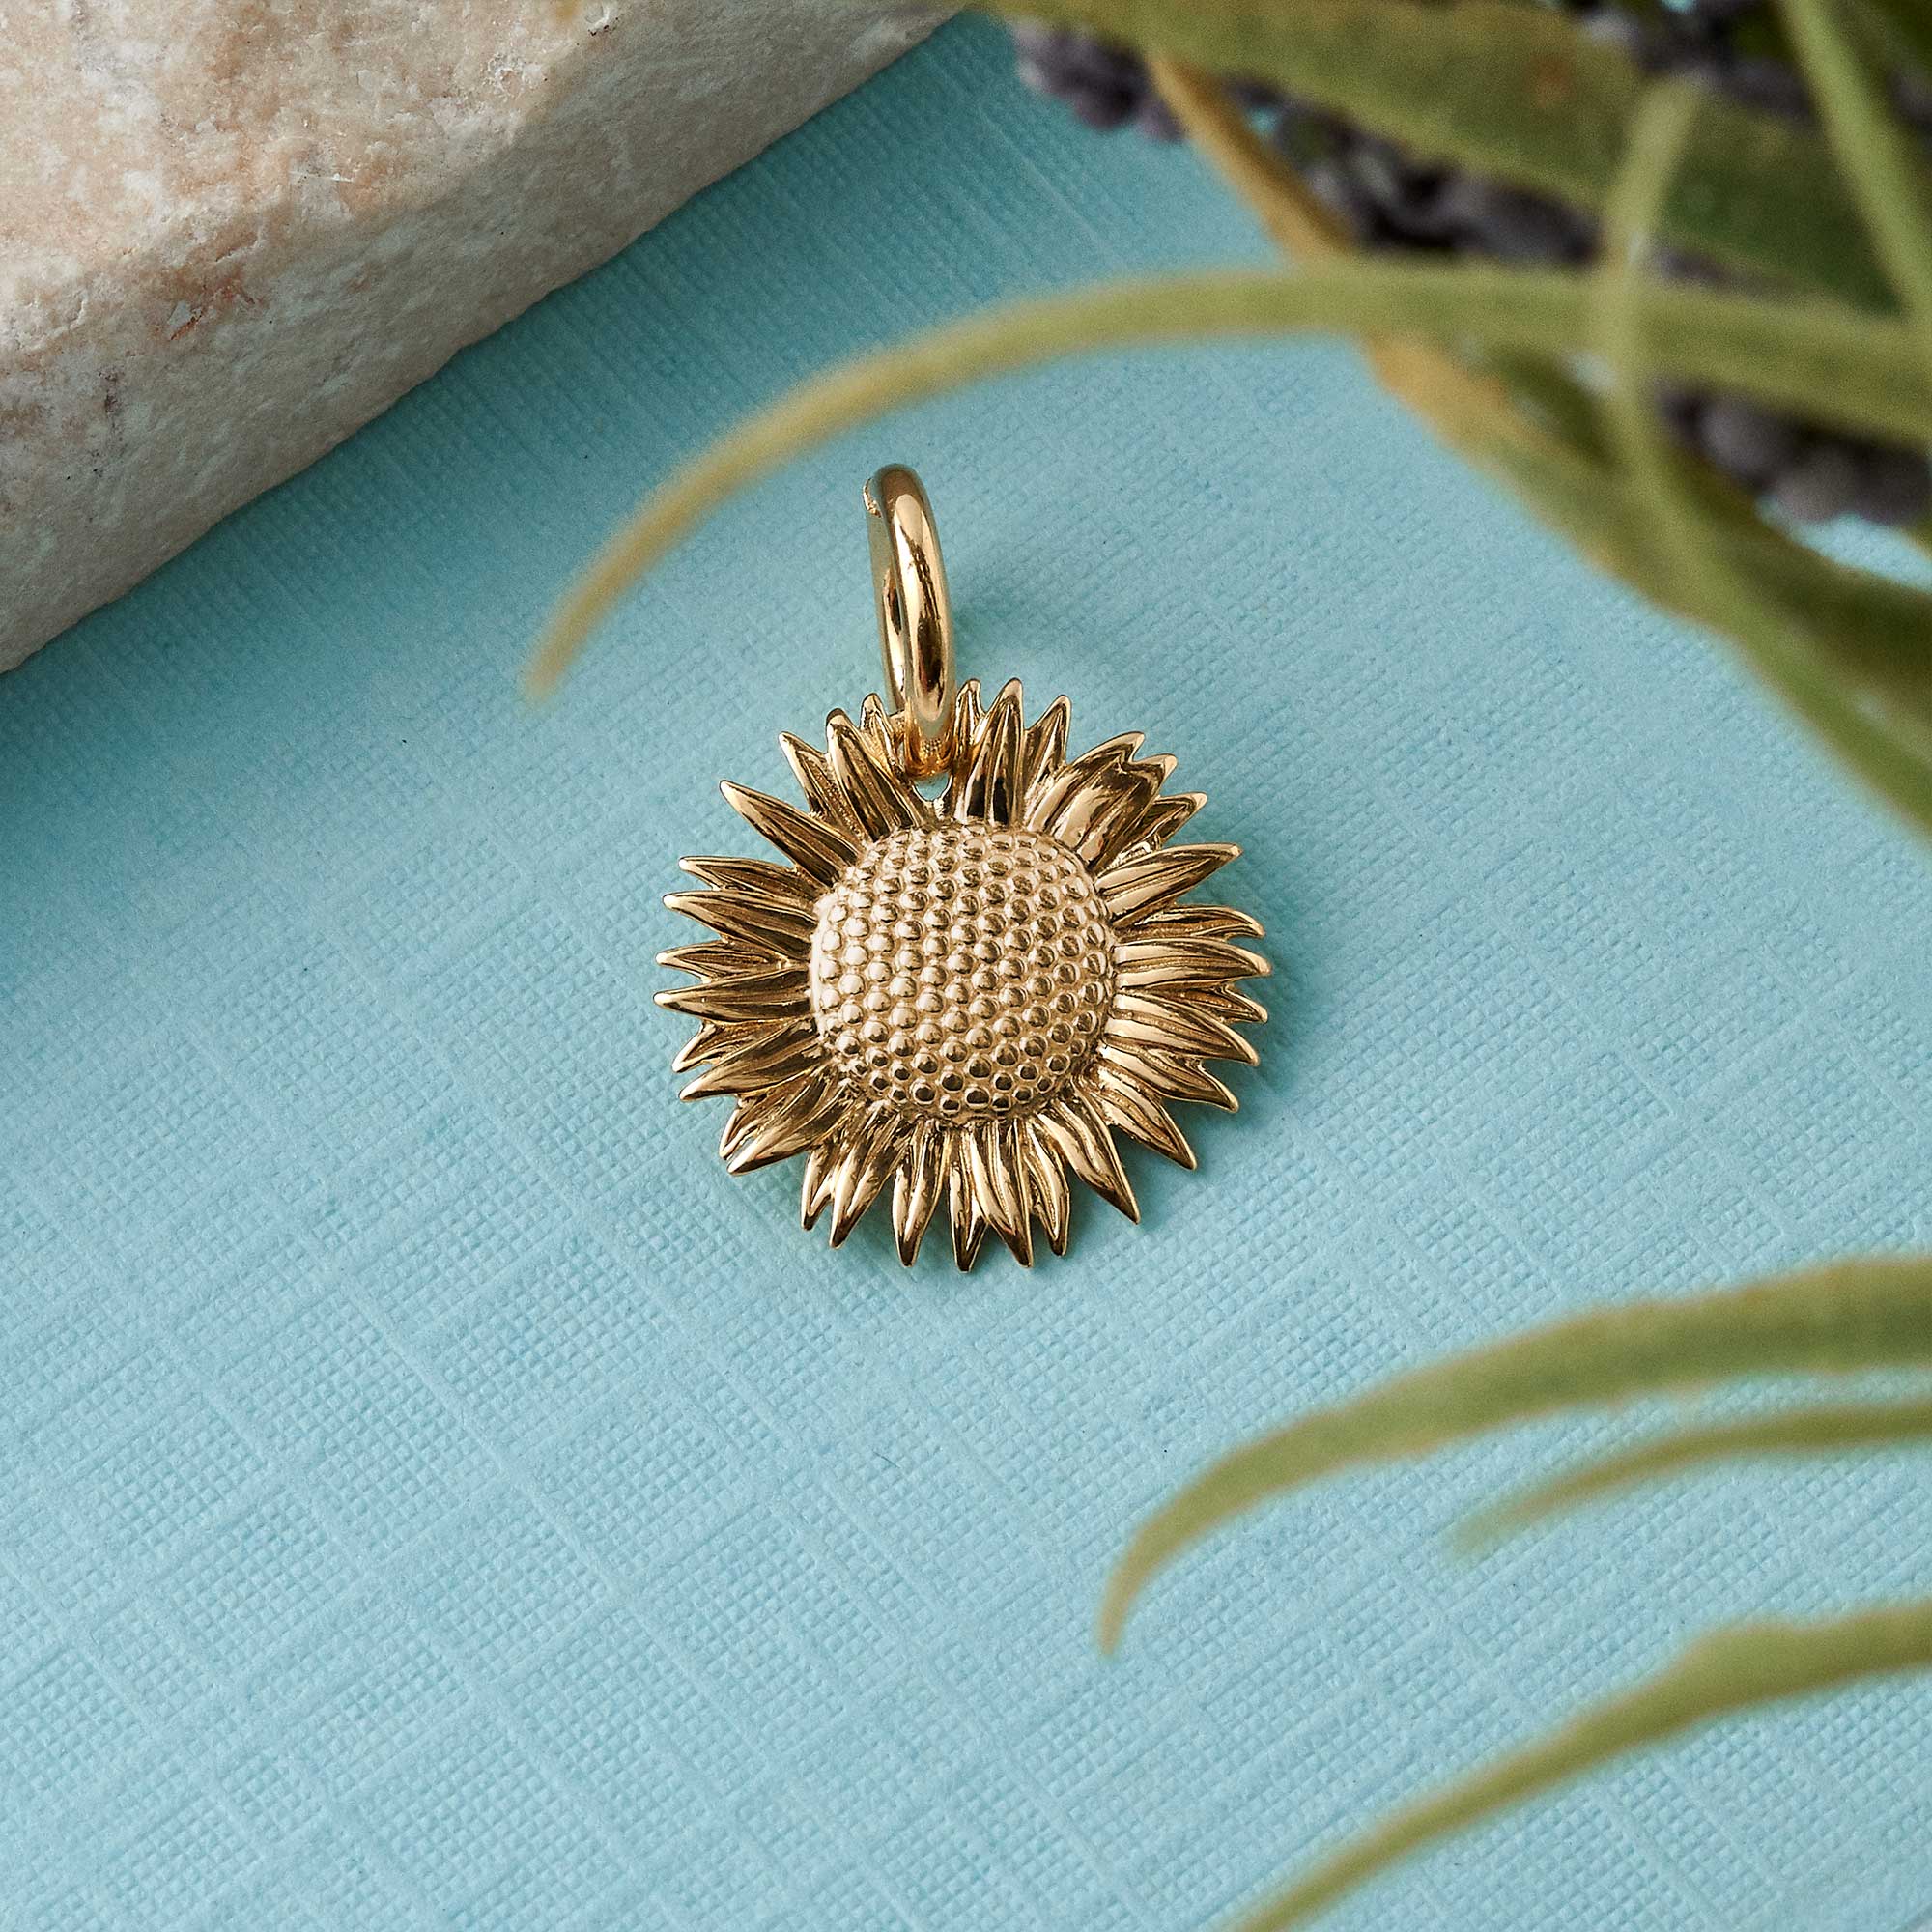 solid gold sunflower bracelet necklace charm 9 carat made in UK